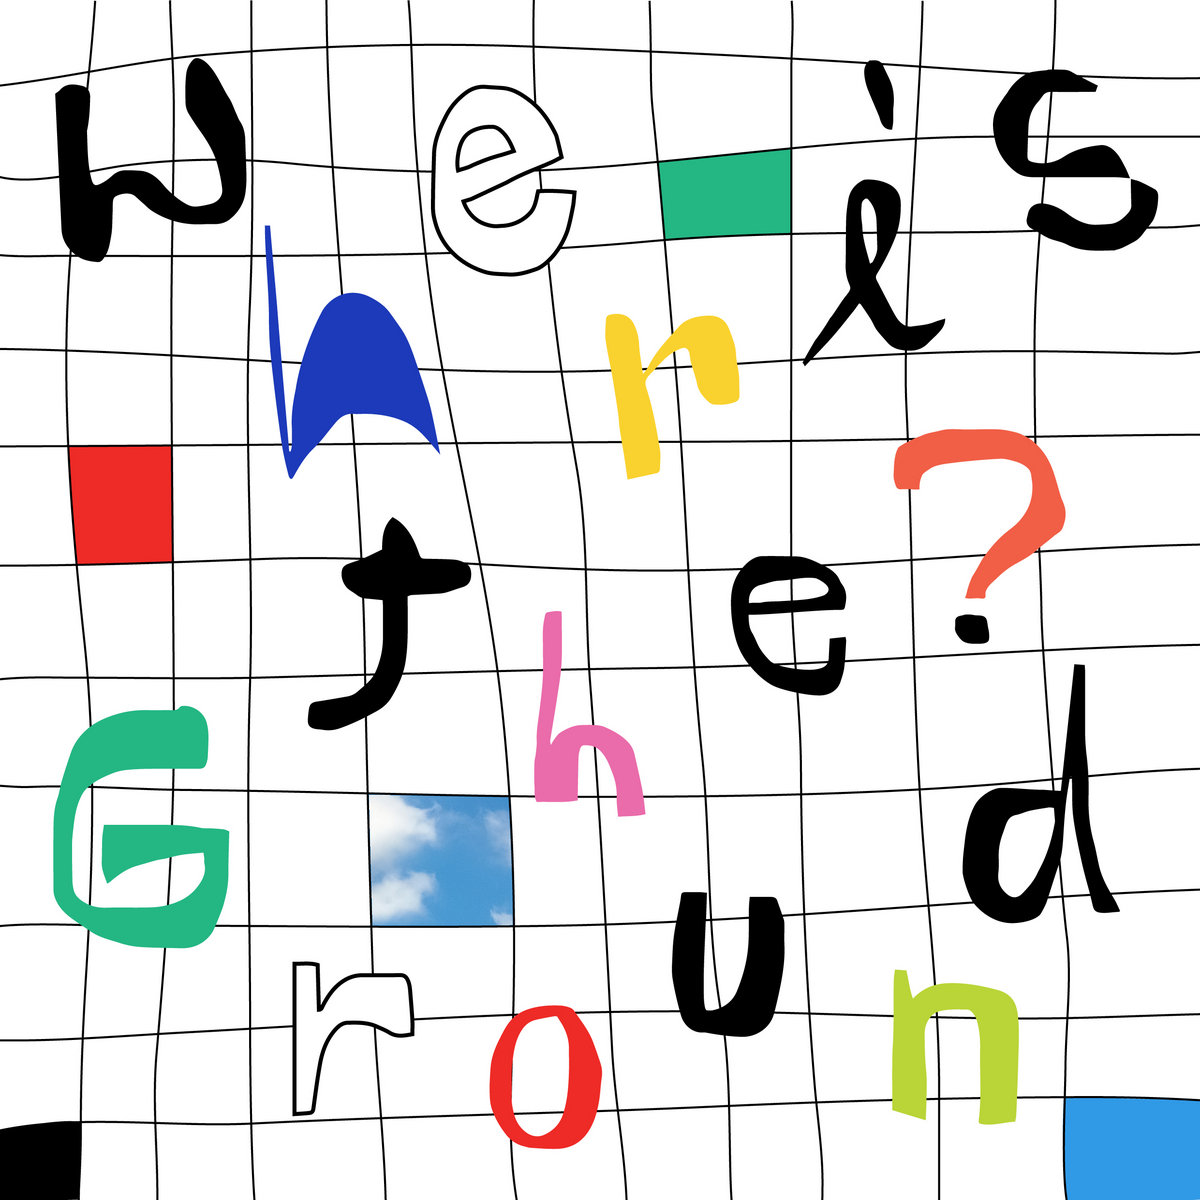 WHERE’S THE GROUND?